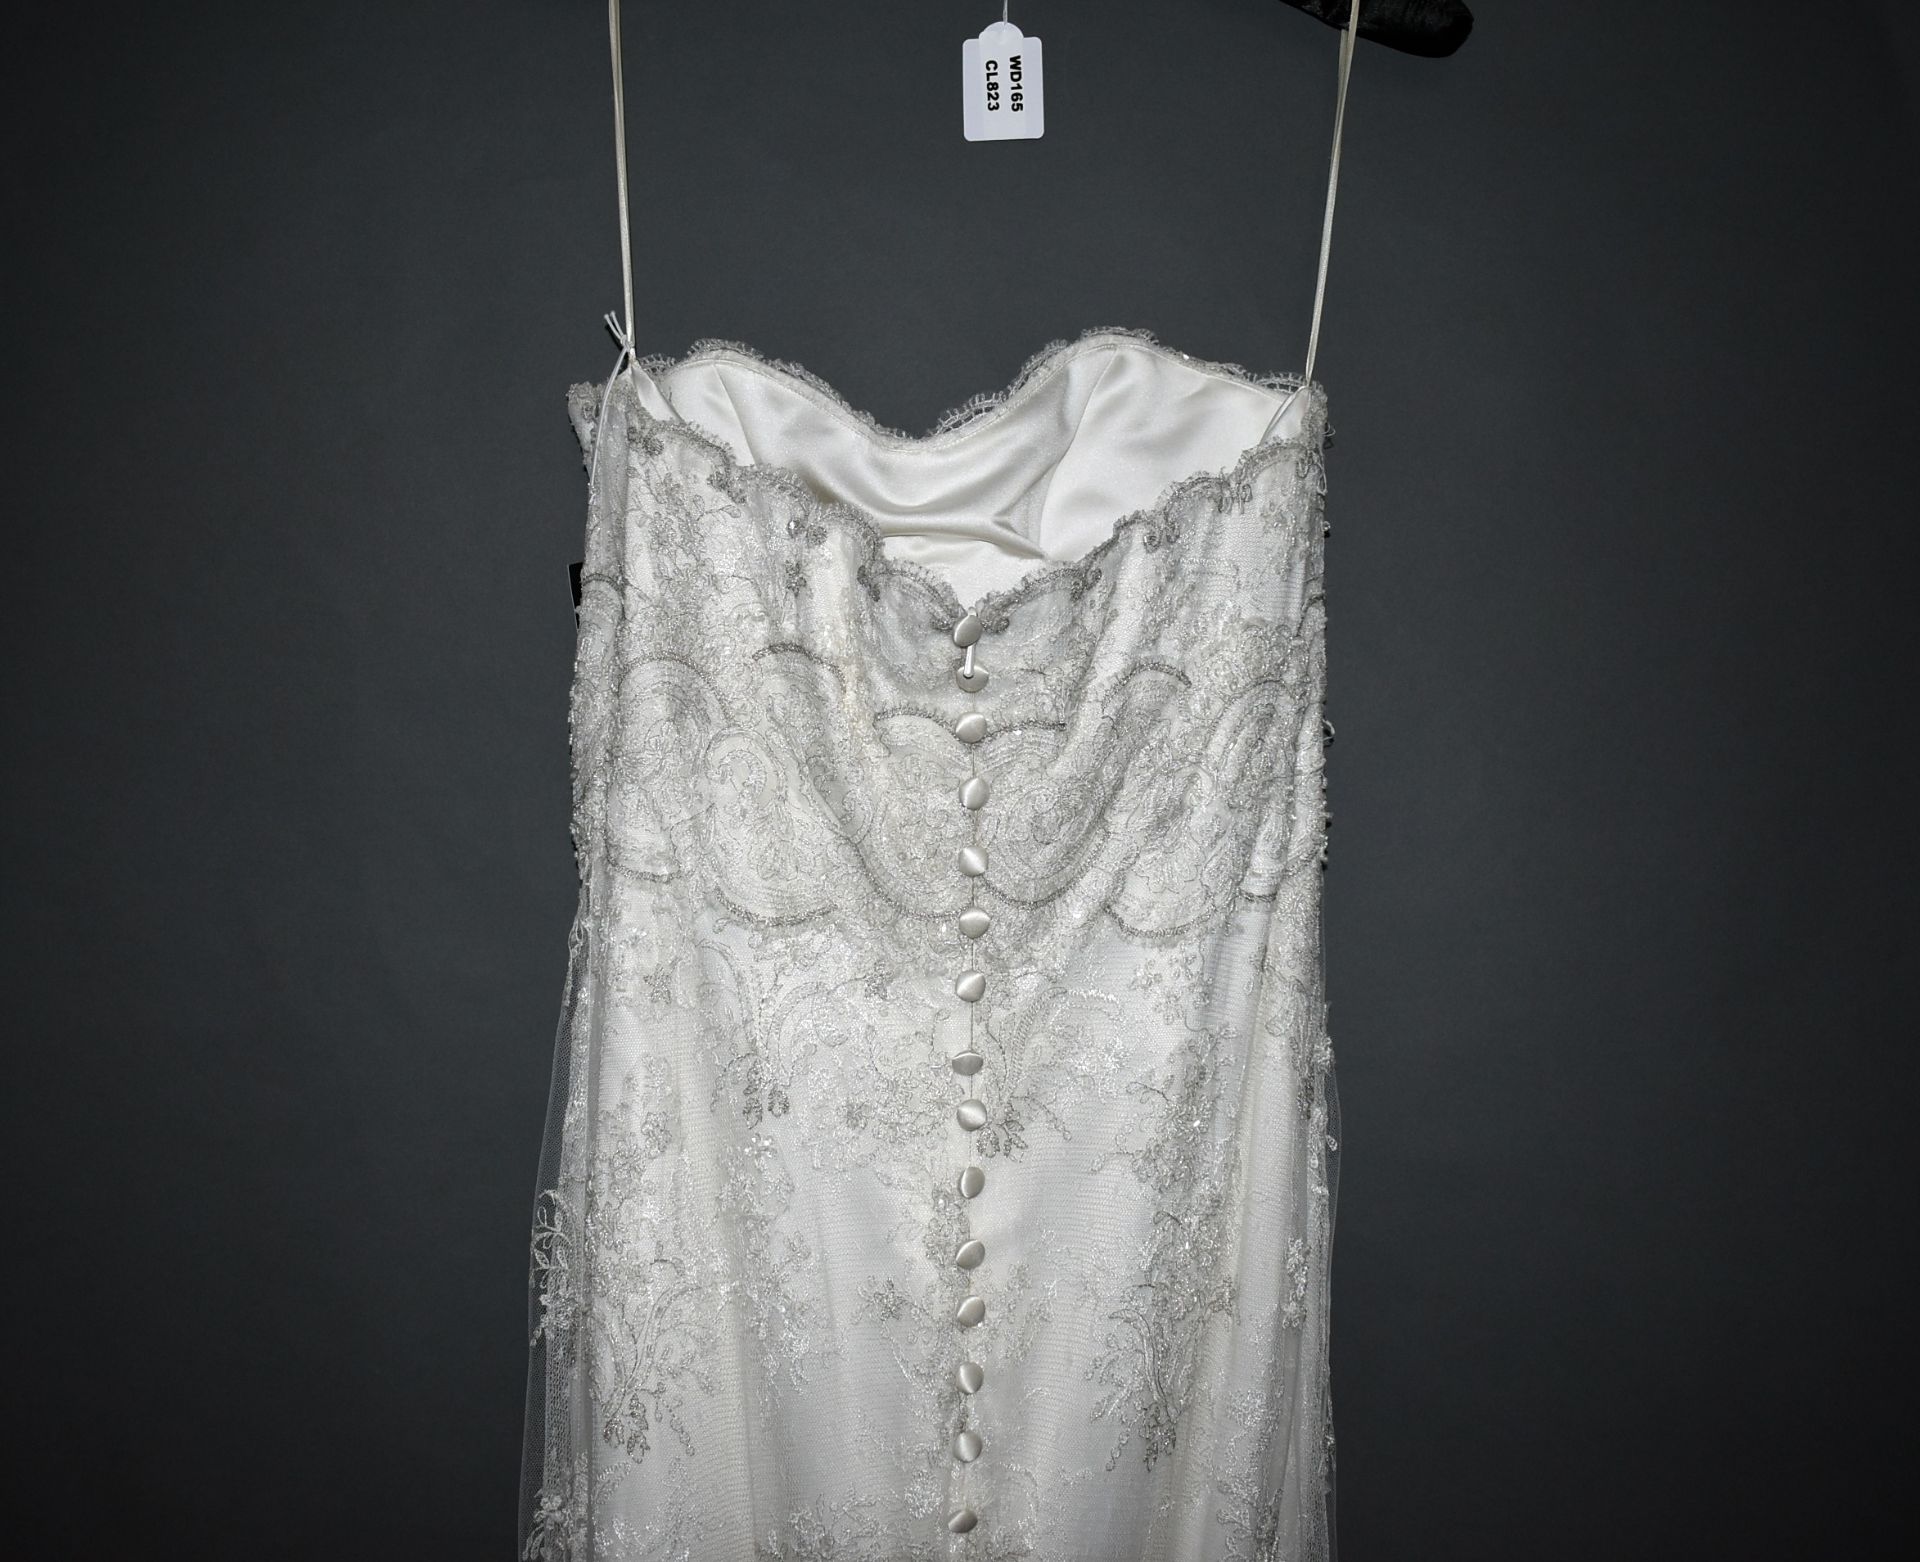 1 x LUSAN MANDONGUS Strapless Lace & Beaded Designer Wedding Dress Bridal Gown RRP £2,250 UK 12 - Image 2 of 5